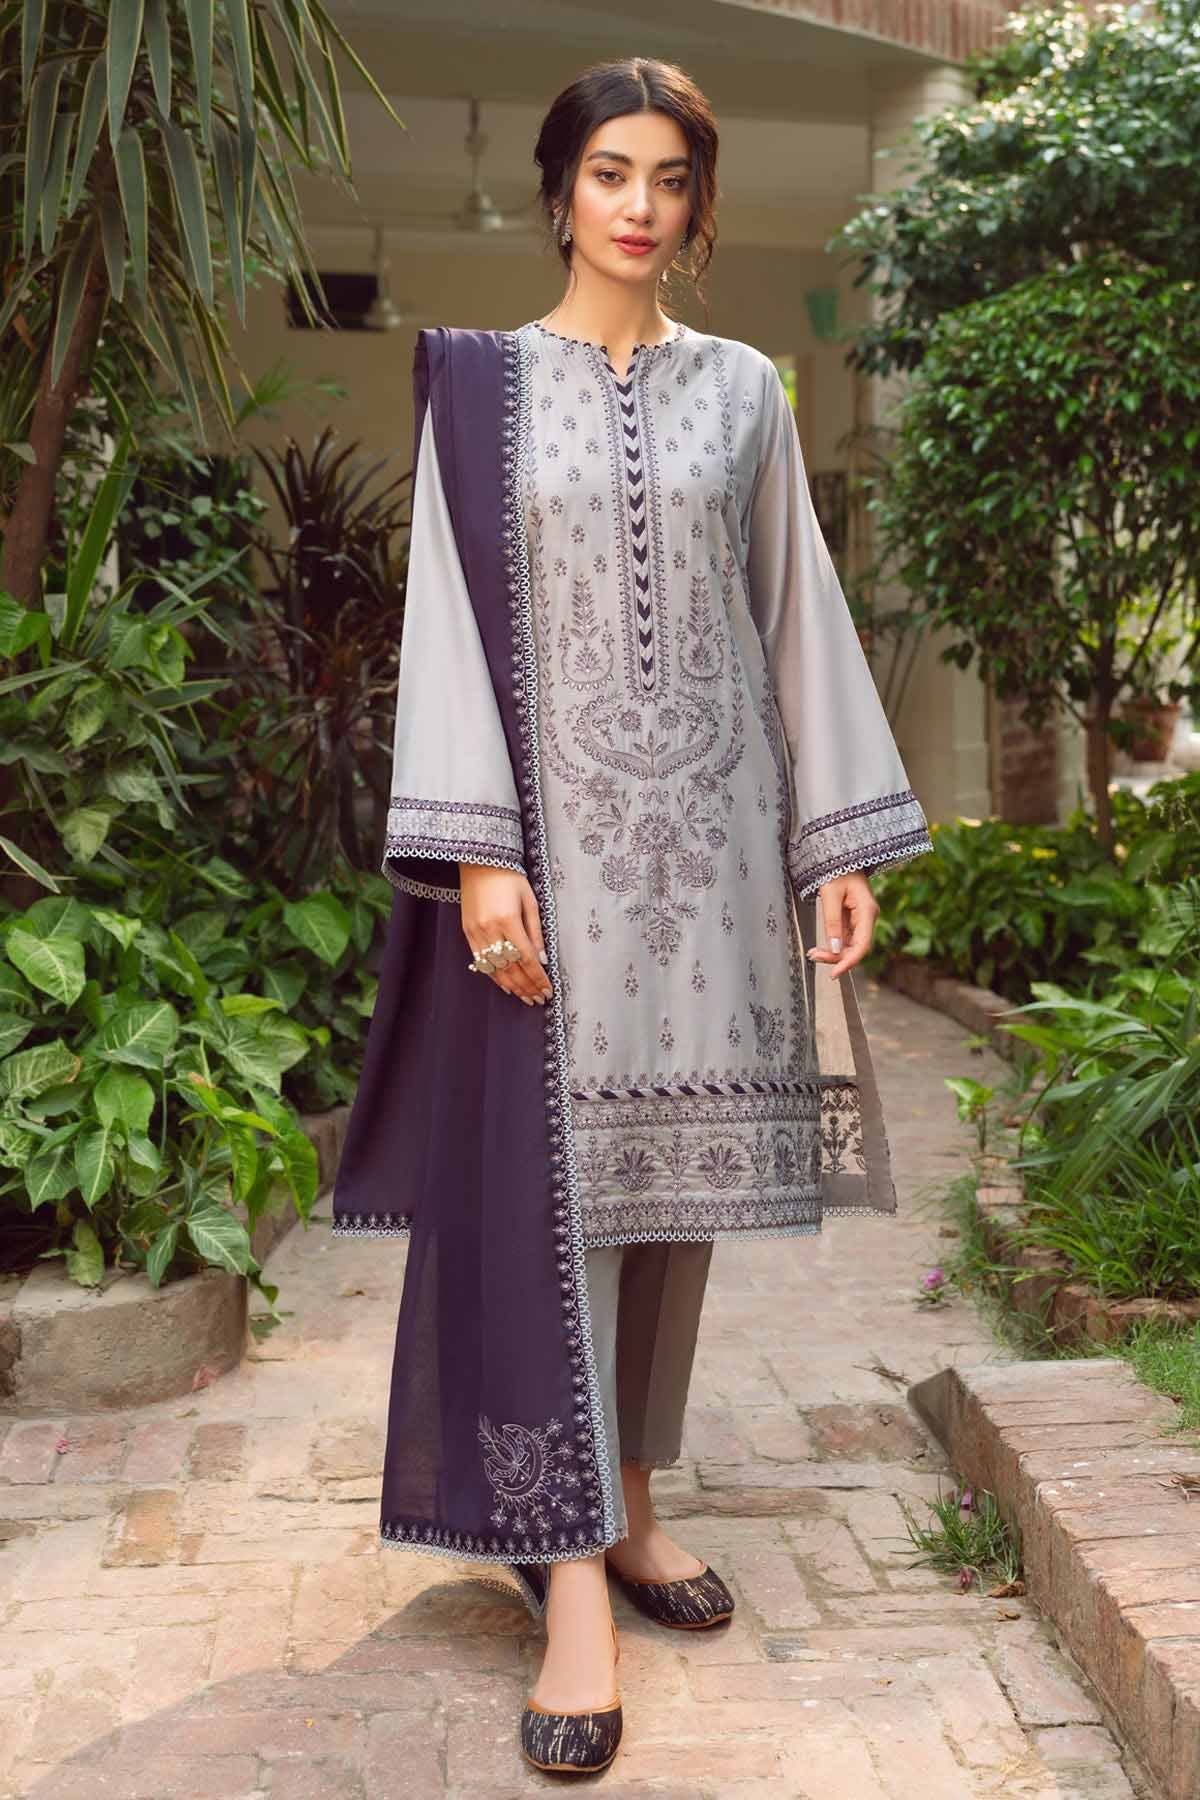 jazmin women new dress design empires collection pakistan top brand clothing brand fashion 3 piece suit